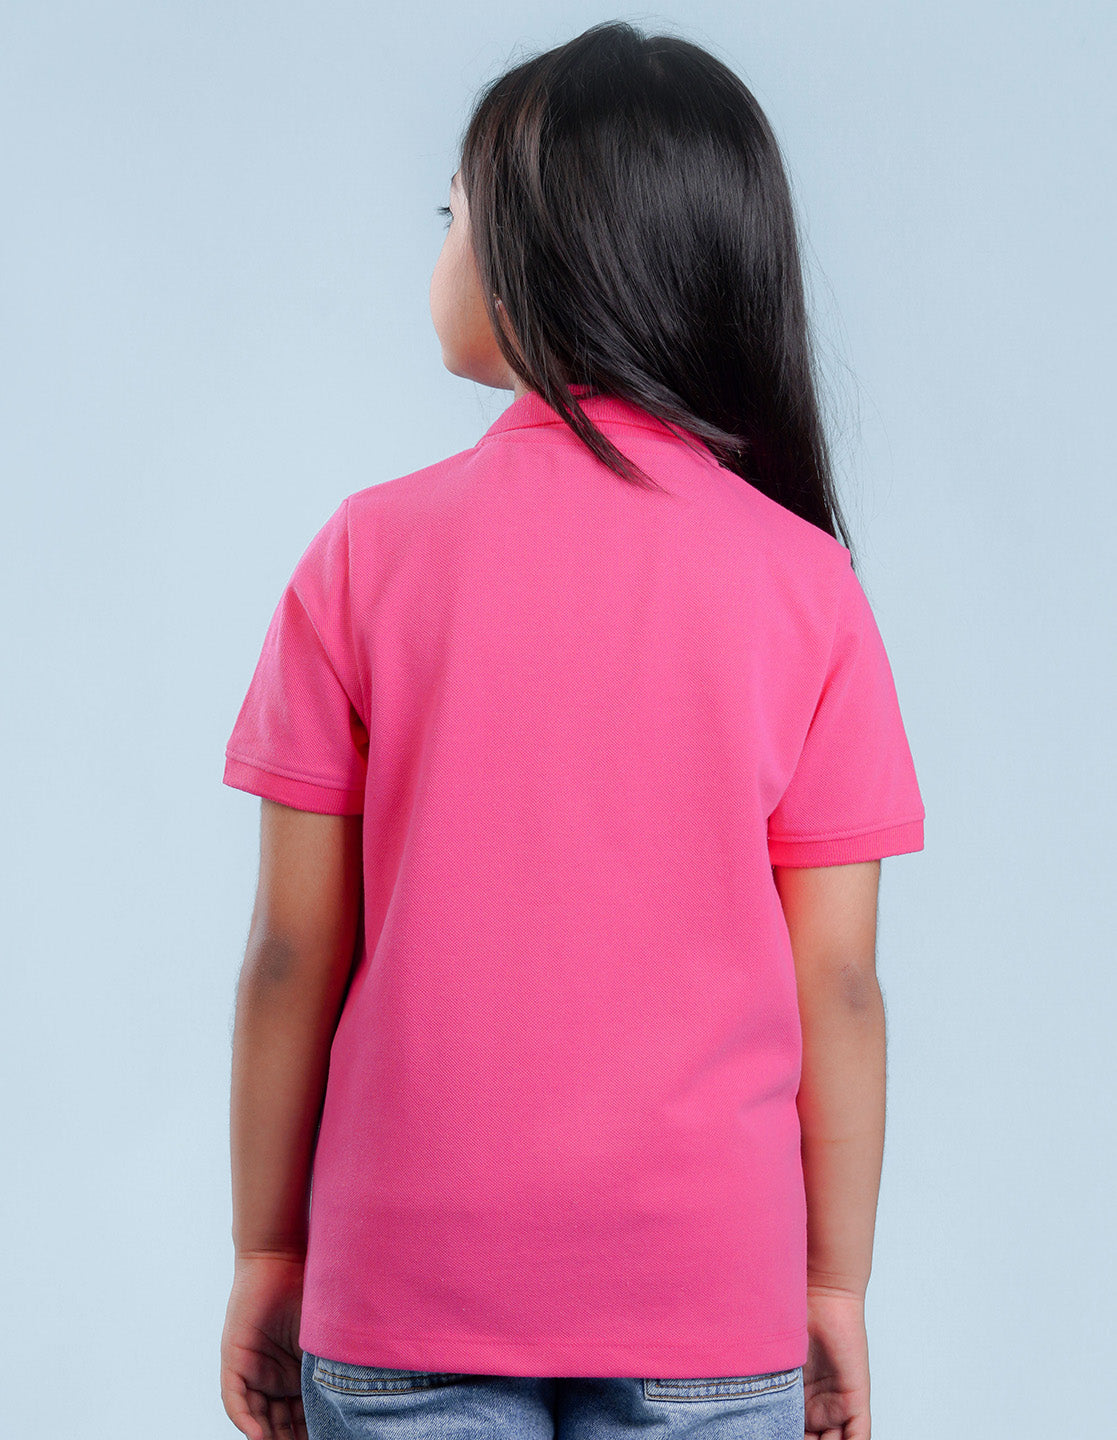 Nusyl Solid Bubblegum pink Girls polo t-shirt